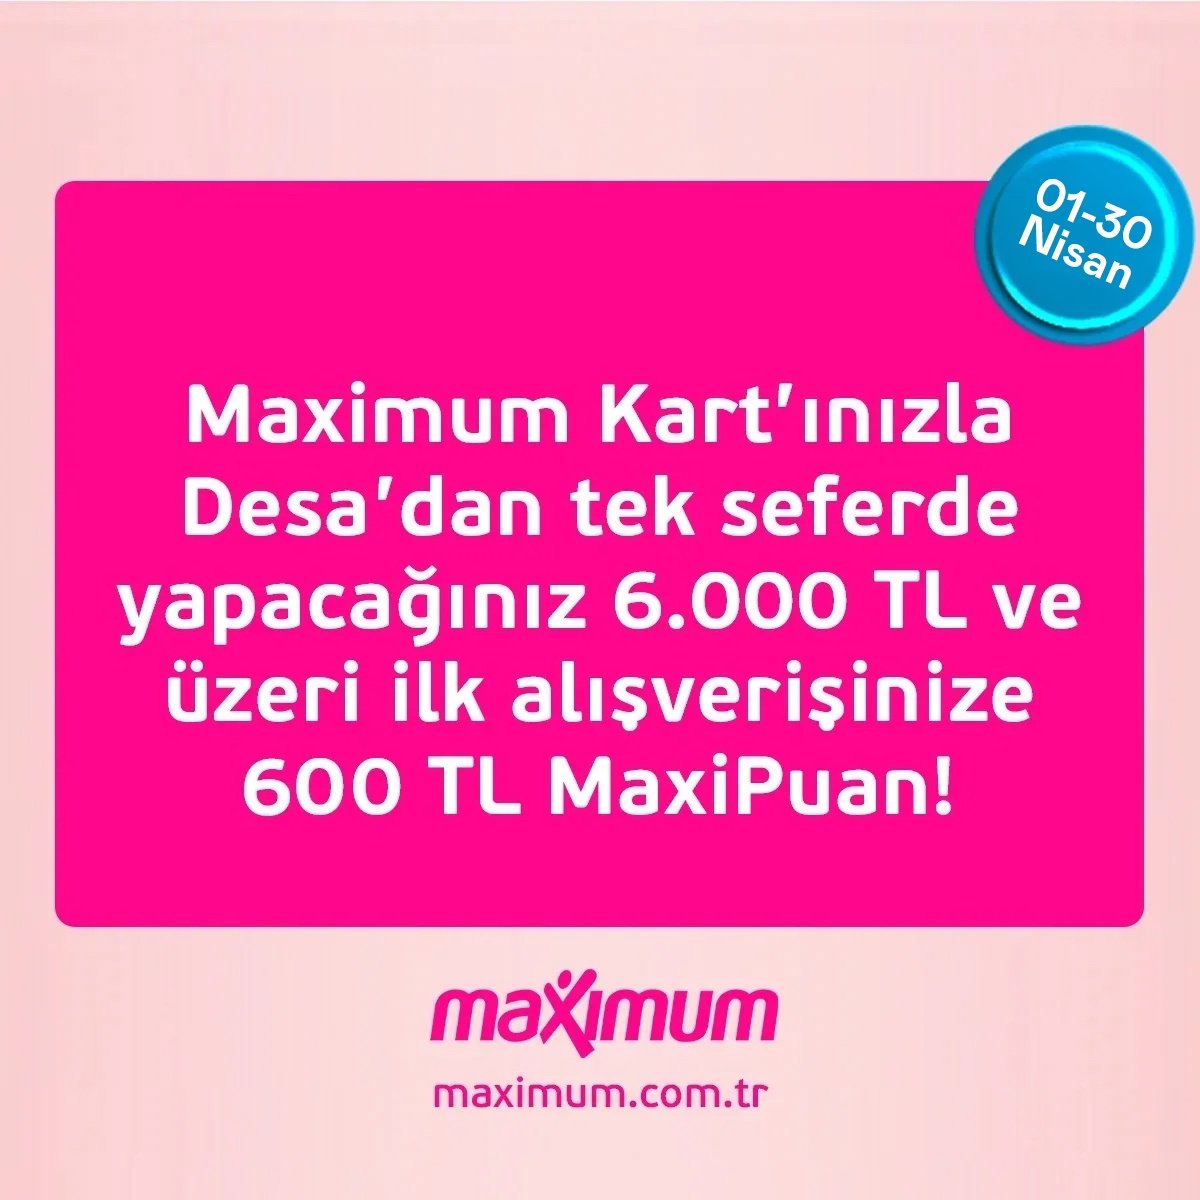 Maximum Kart'ına 600 TL MaxiPuan